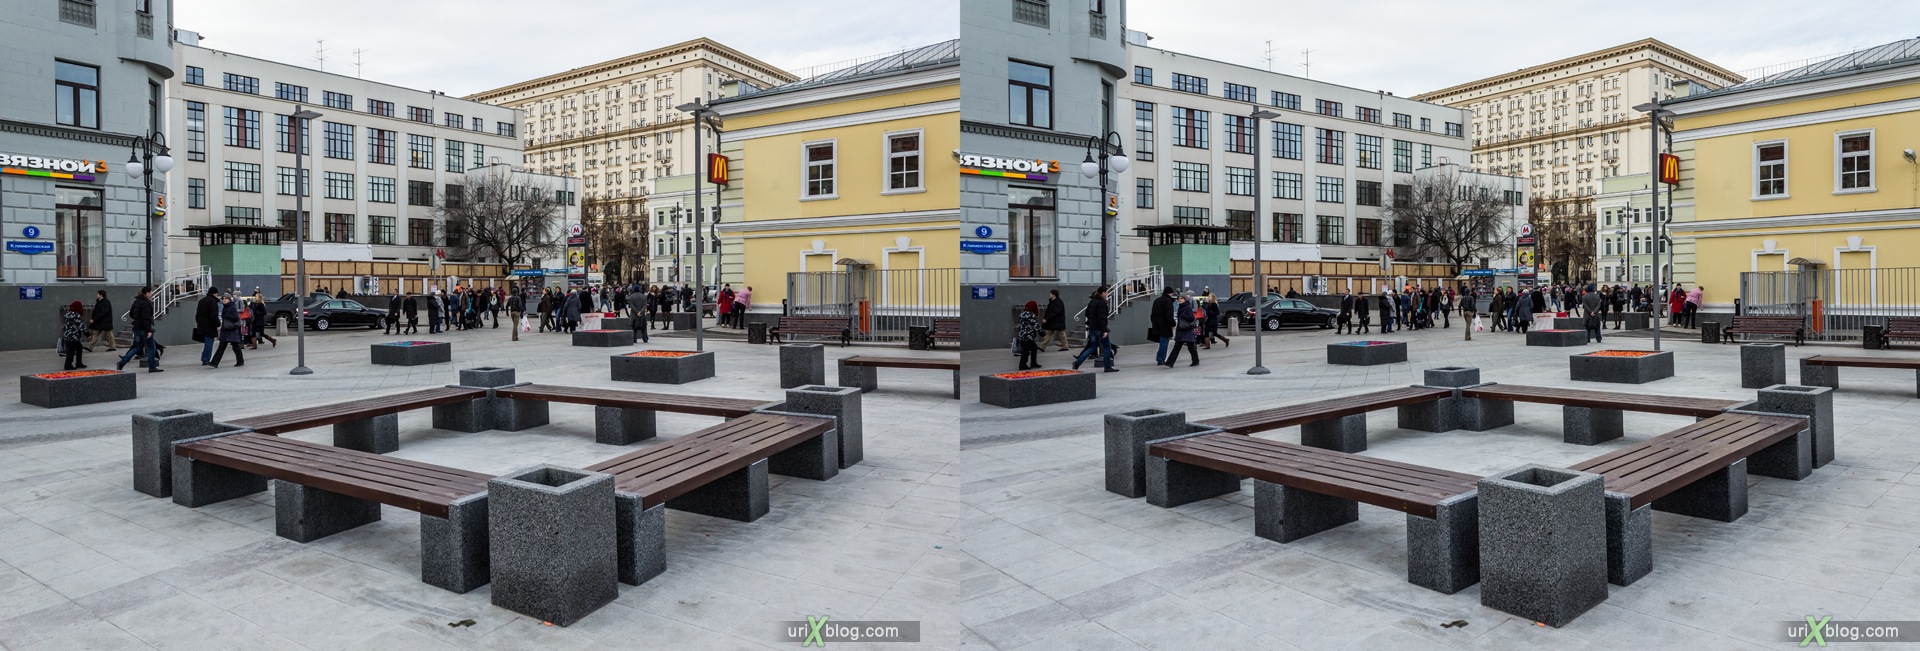 2013, Moscow, Russia, Tratjakovskaya, metro, square, street, new pedestrian zone, 3D, stereo pair, cross-eyed, crossview, cross view stereo pair, stereoscopic